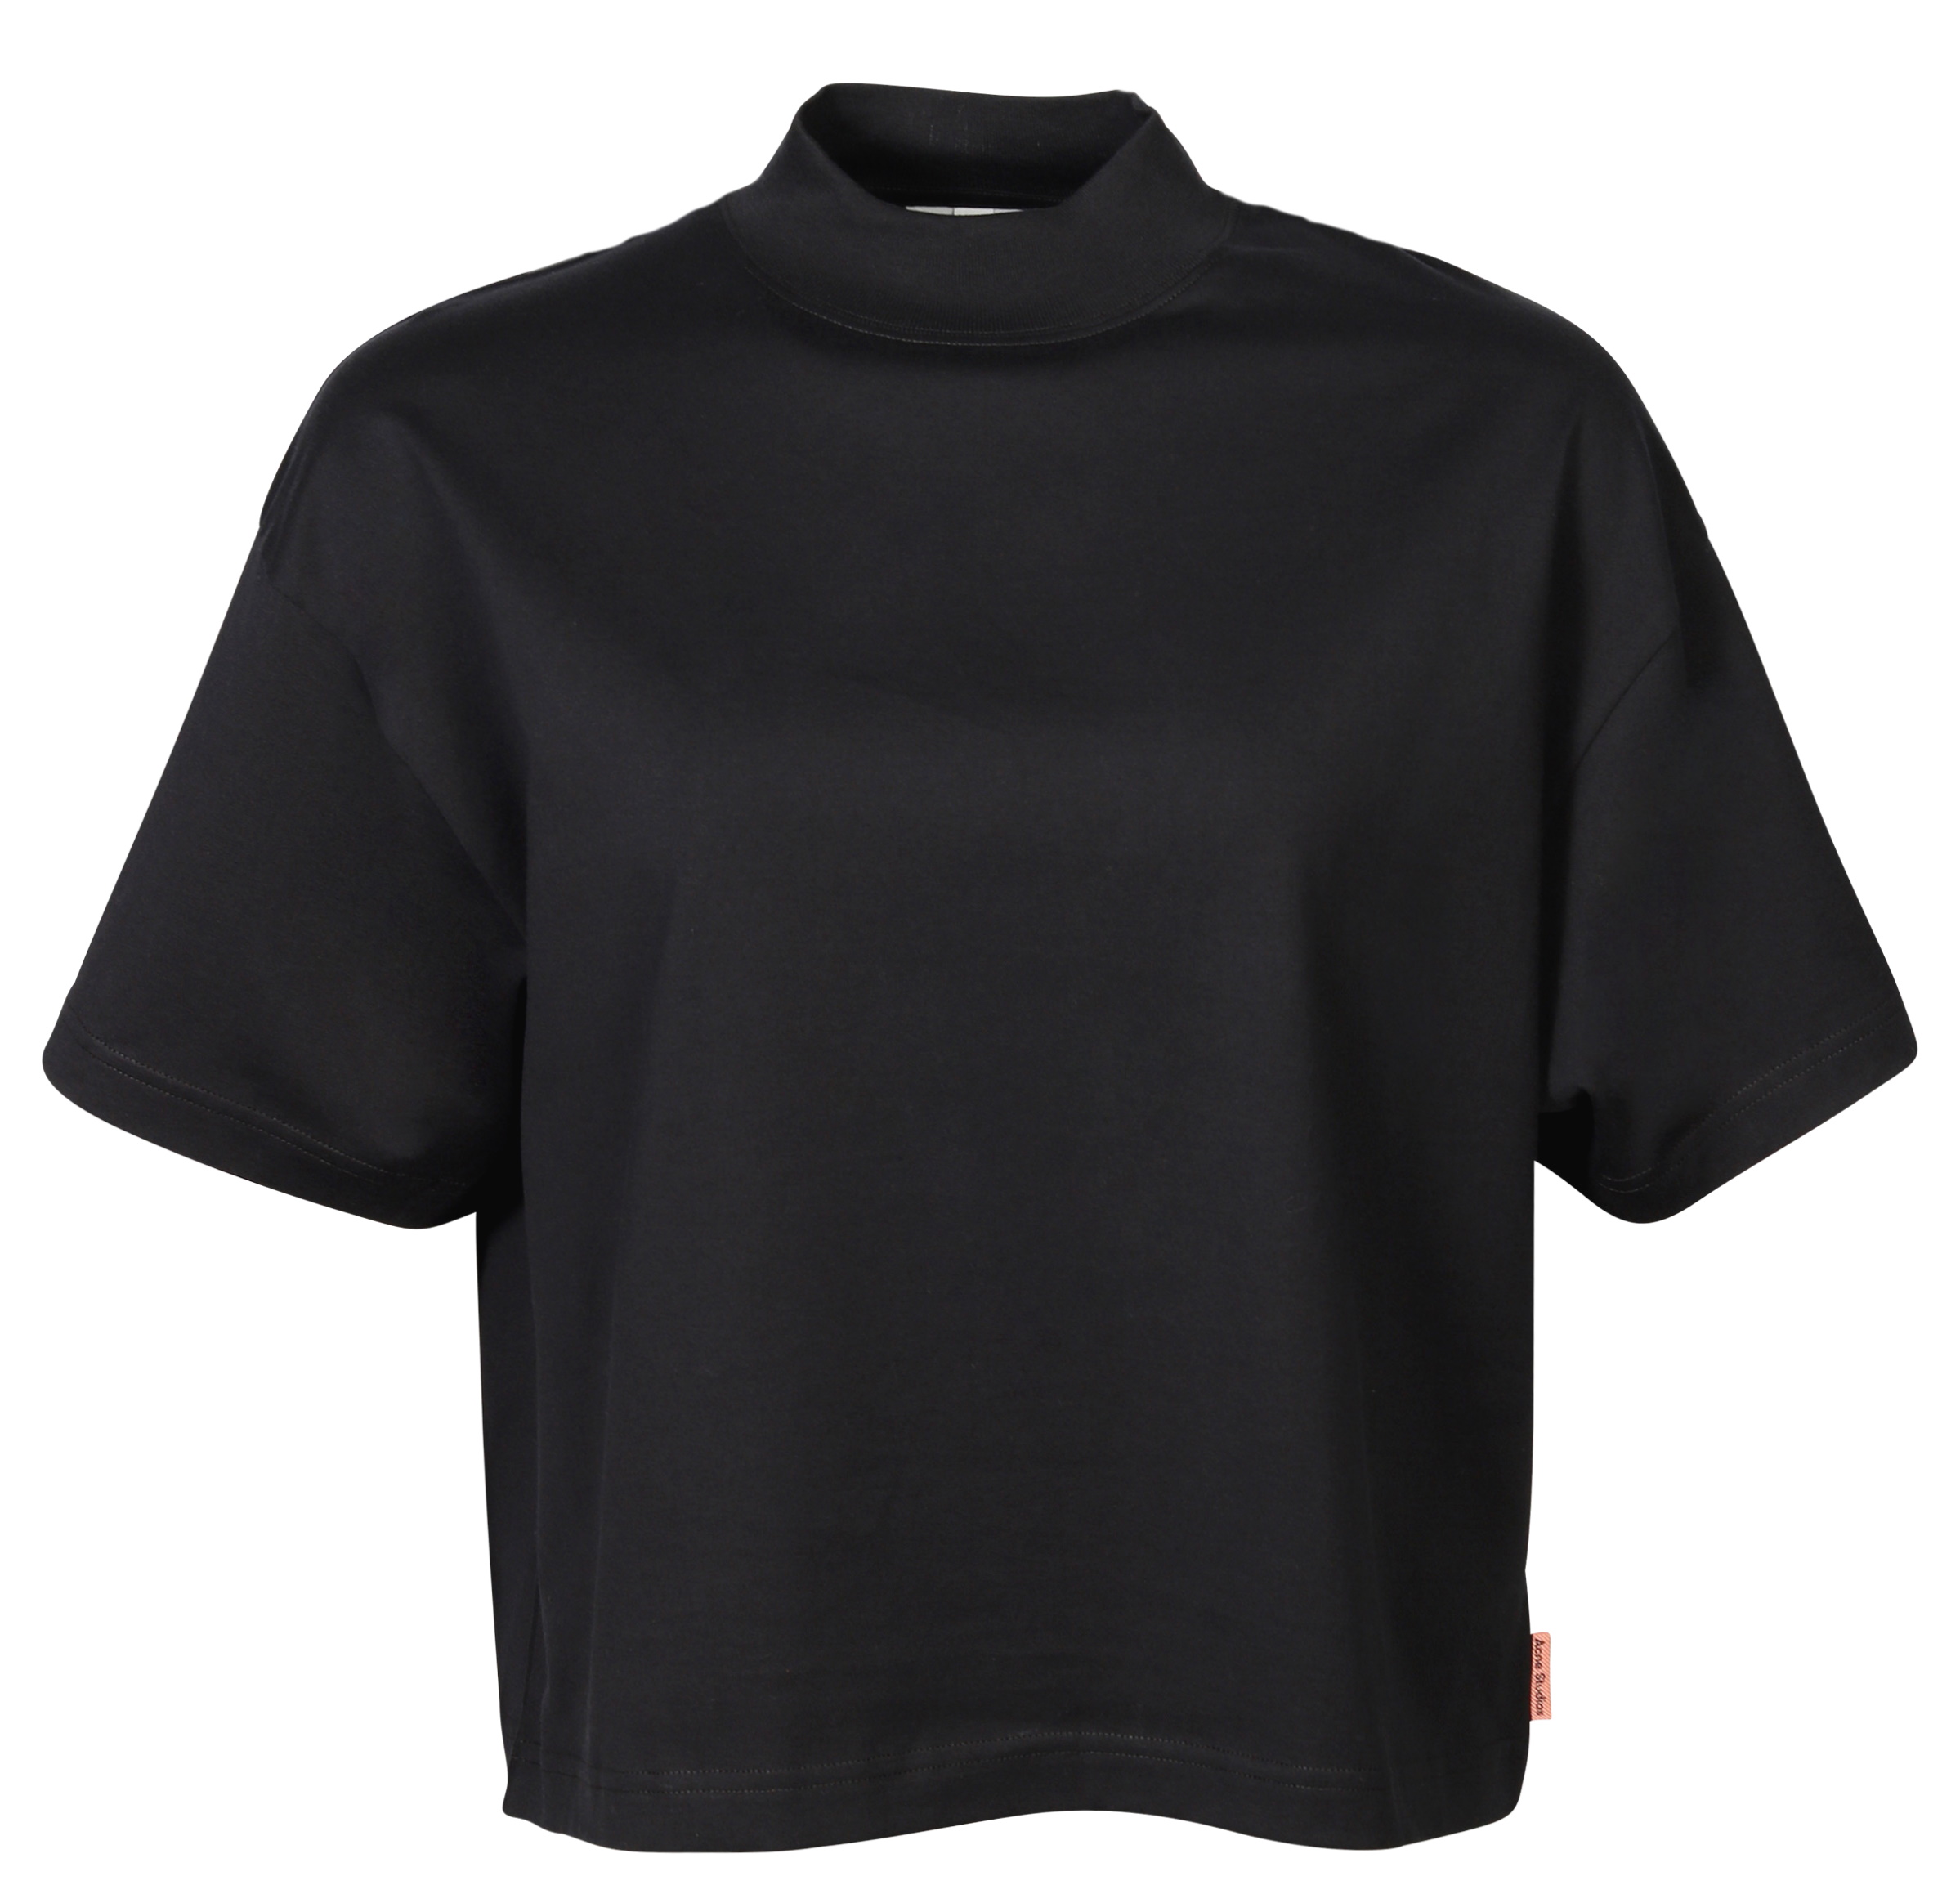 Acne Studios Cropped Turtle Neck T-Shirt Emirka Black